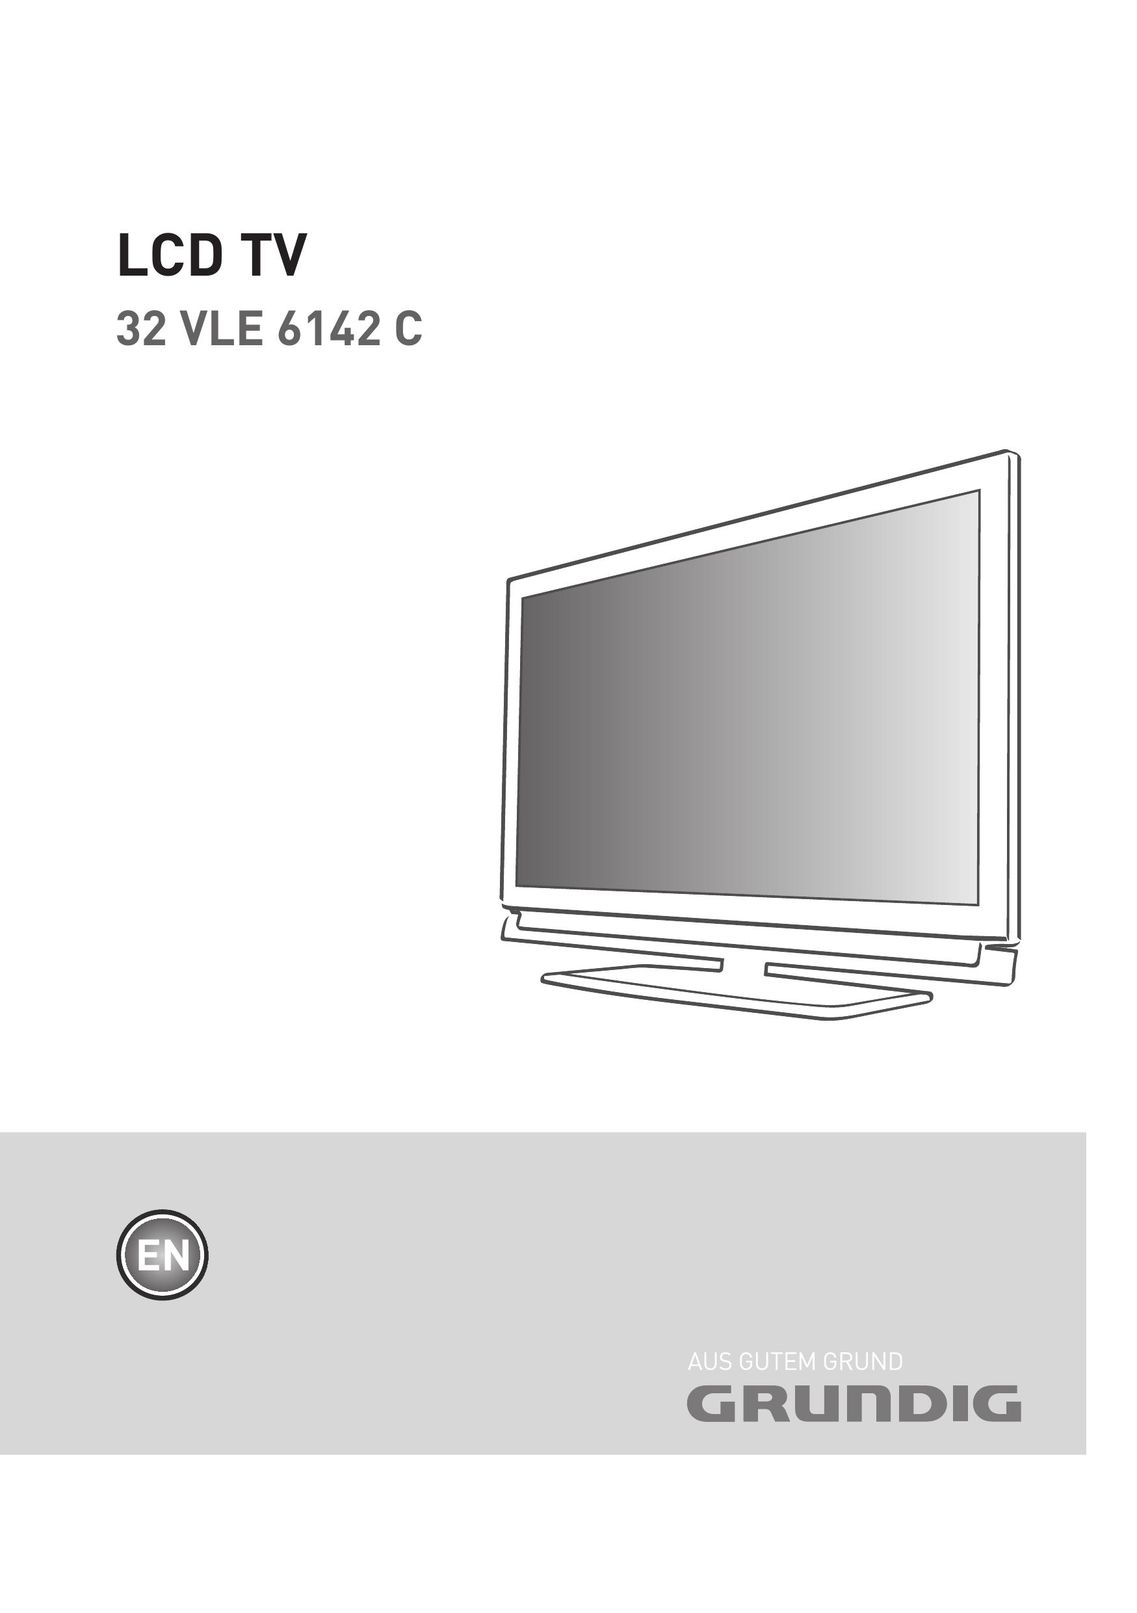 Grundig 32 VLE 6142 C Flat Panel Television User Manual